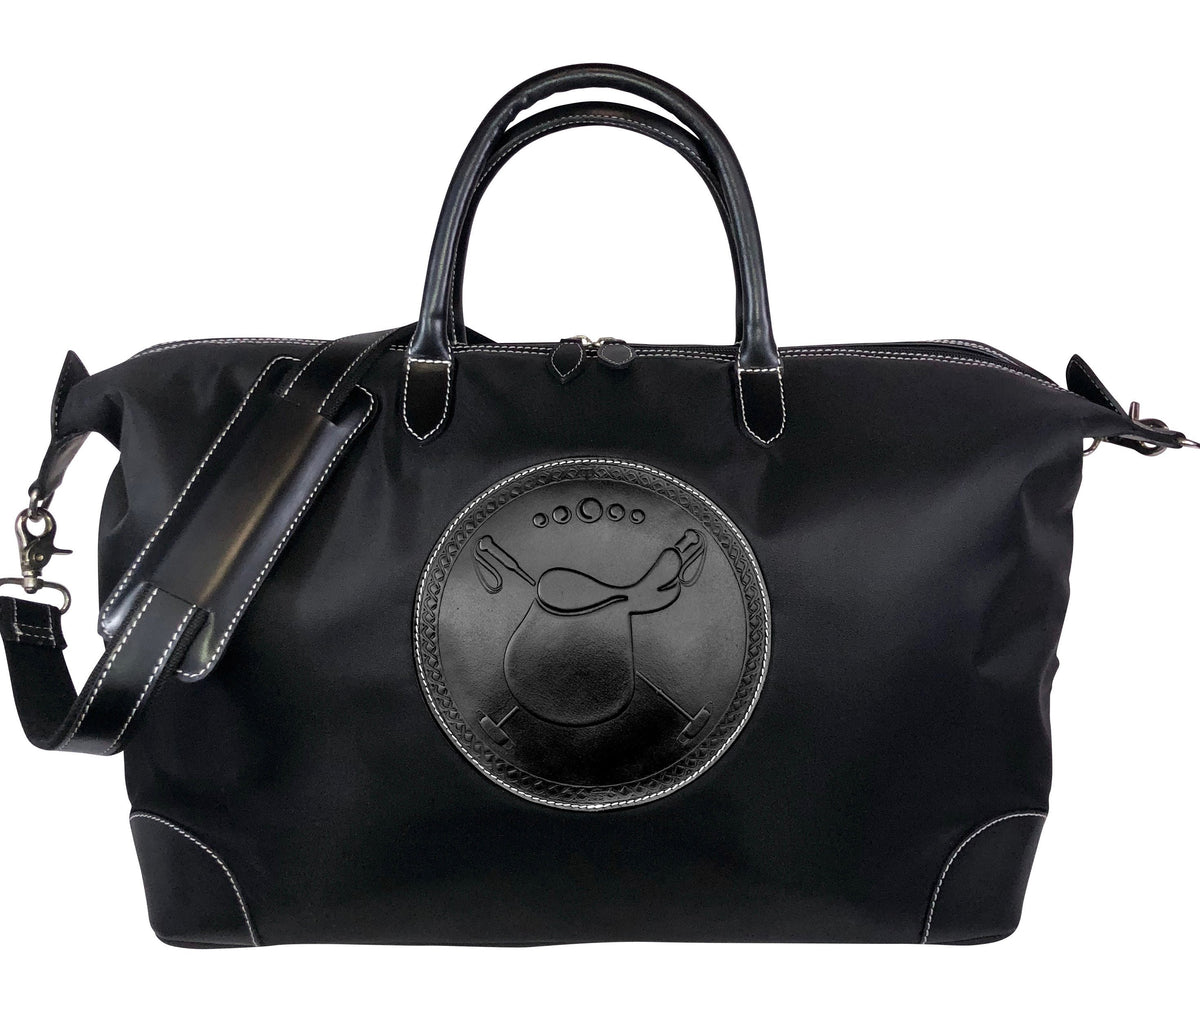 Tucker Tweed Leather Handbags The Tryon Travel Overnight: Polo